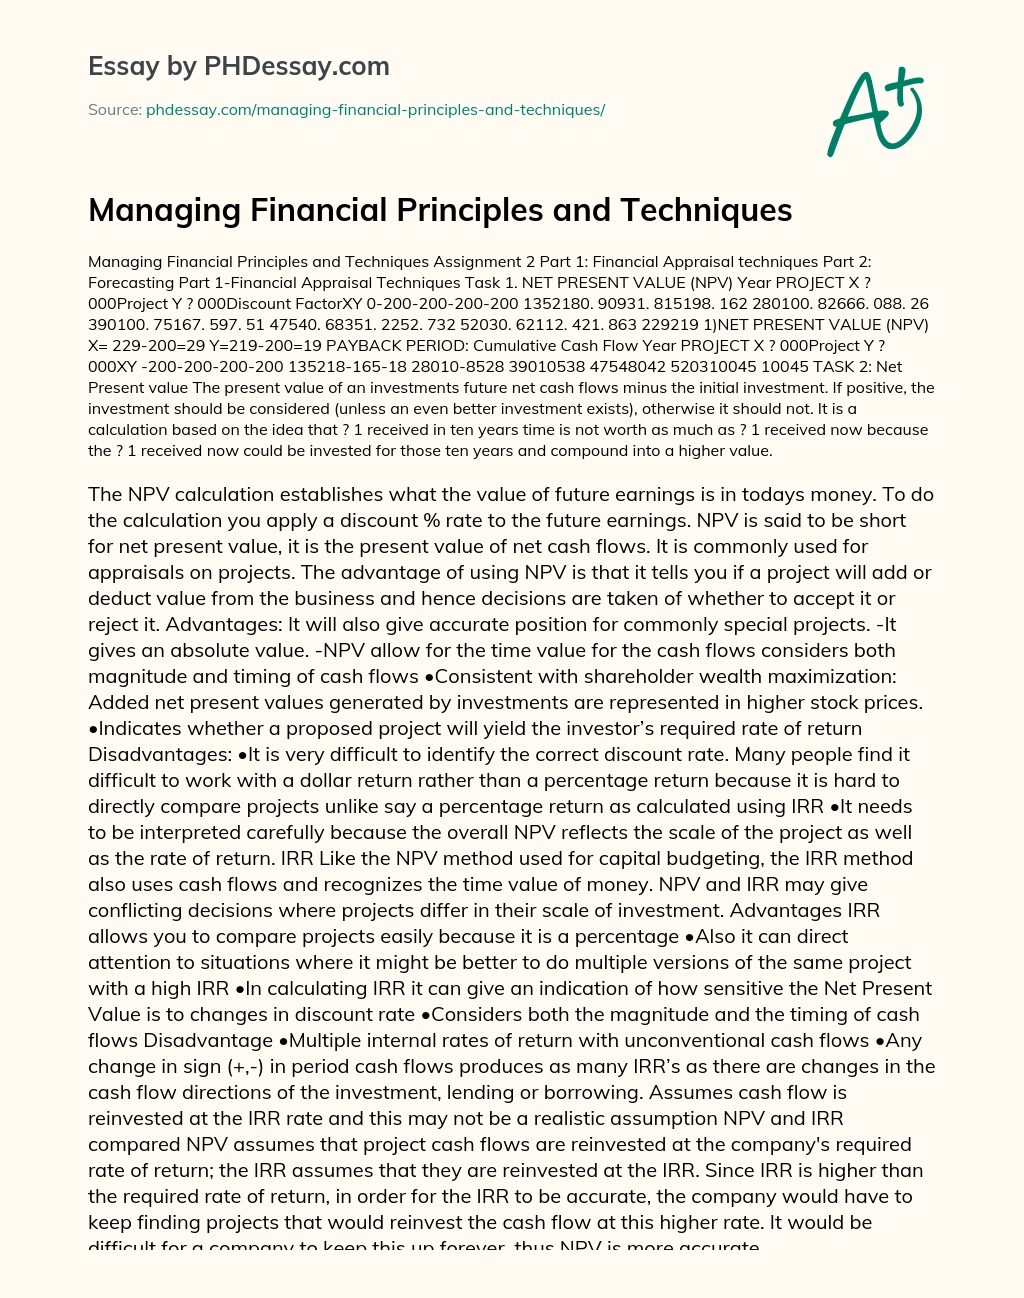 Managing Financial Principles and Techniques essay